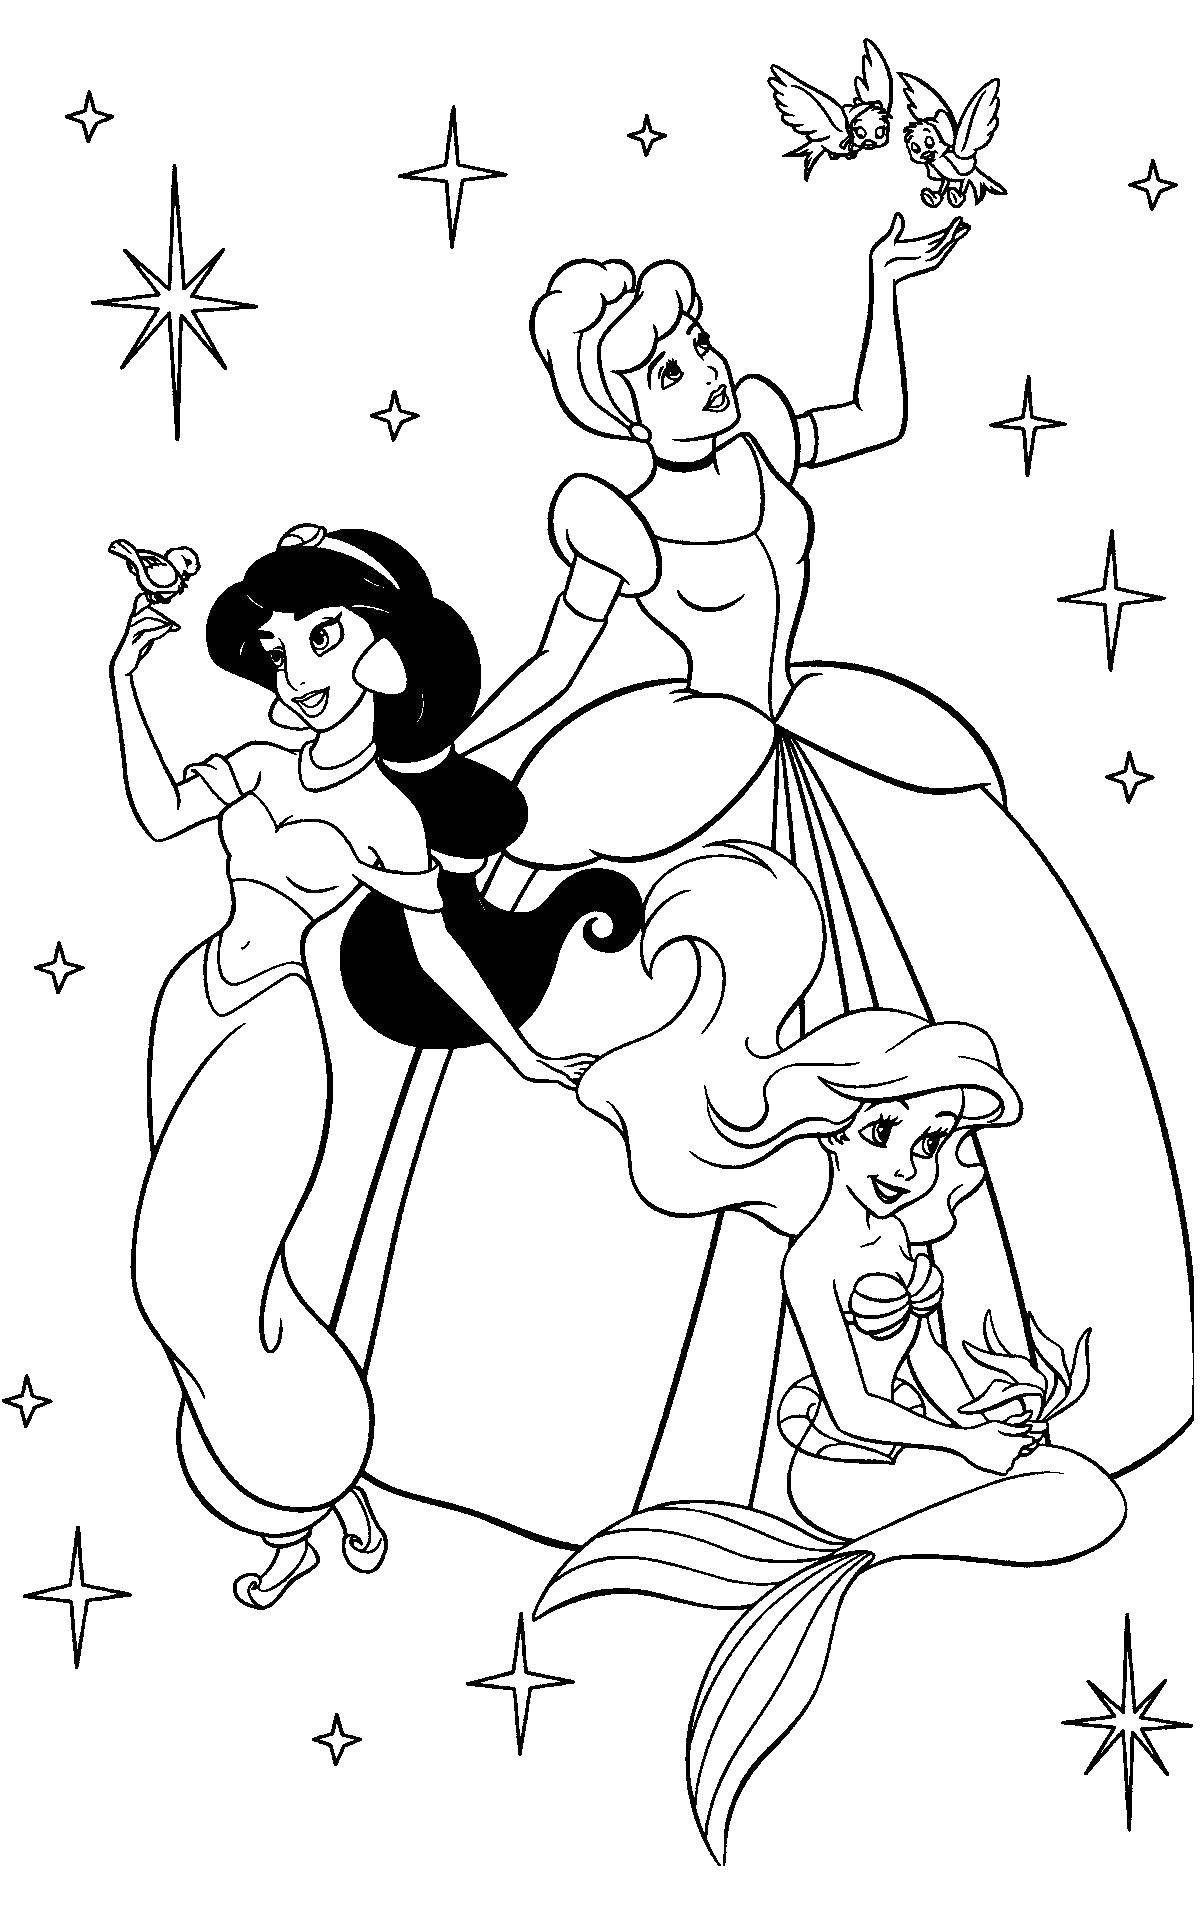 Coloring Princess and mermaid. Category Princess. Tags:  Ariel, Jasmine, Cinderella.